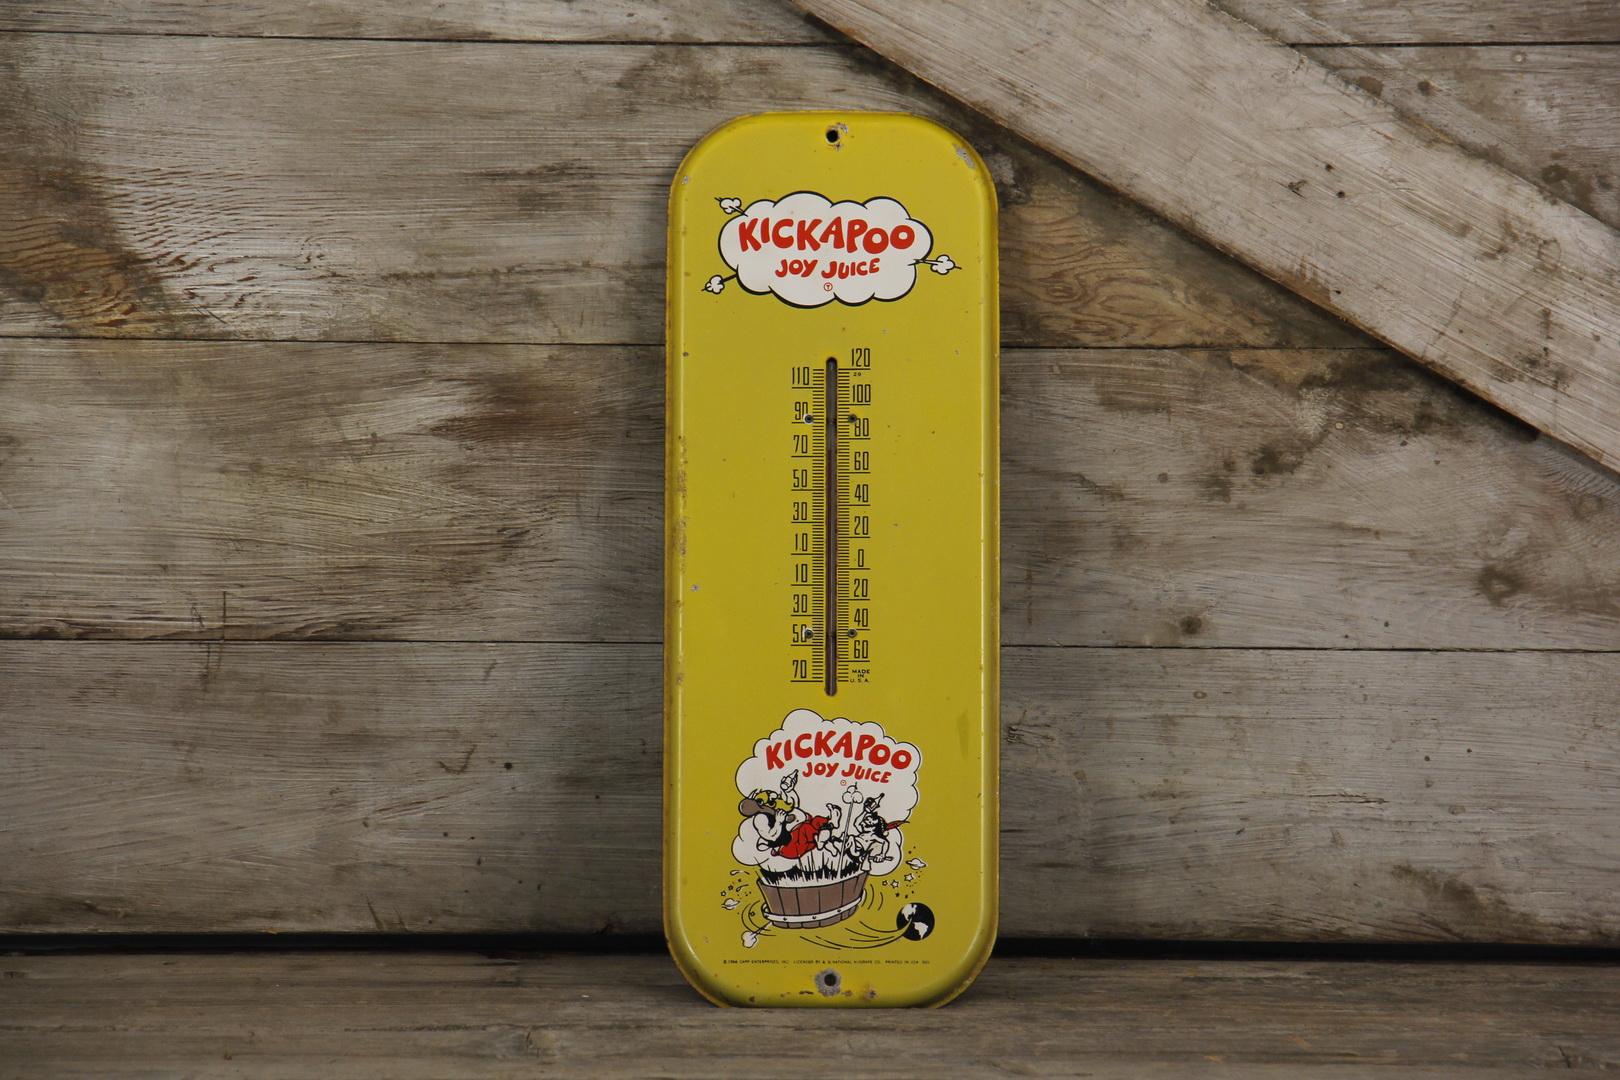 Kickapoo Joy Juice Soda ThermometerAdvertising Sign